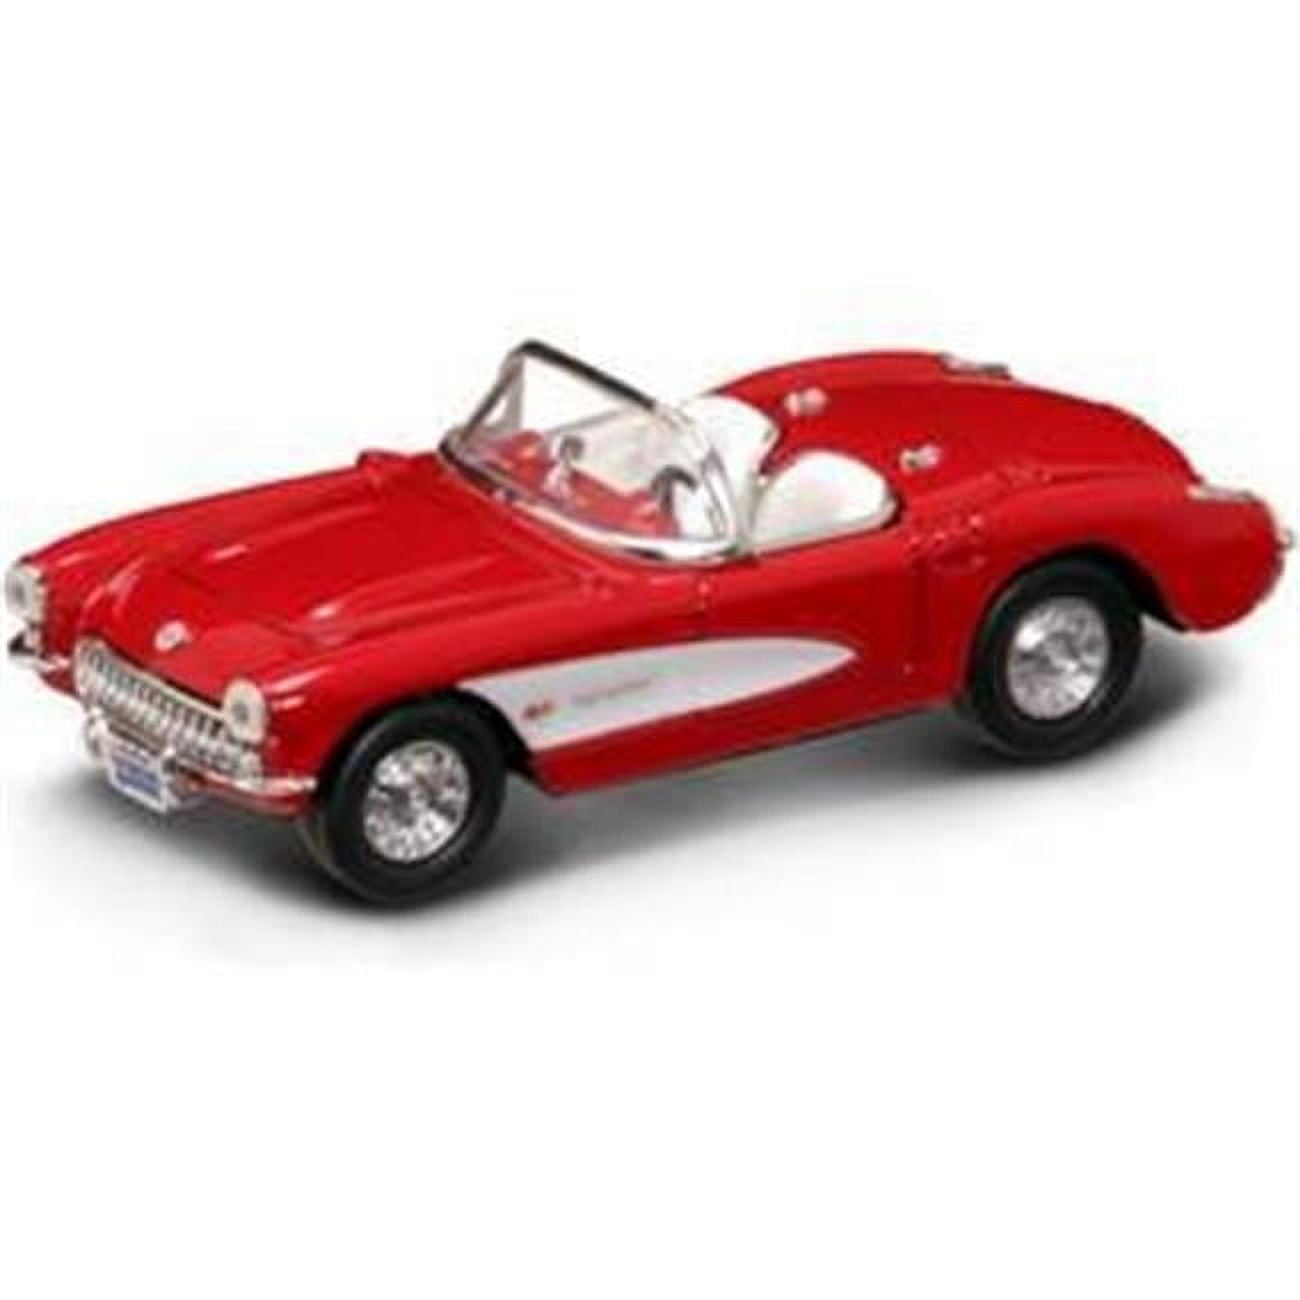 94209r 1 By 43 1957 Chevrolet Corvette Diecast Car Model, Red